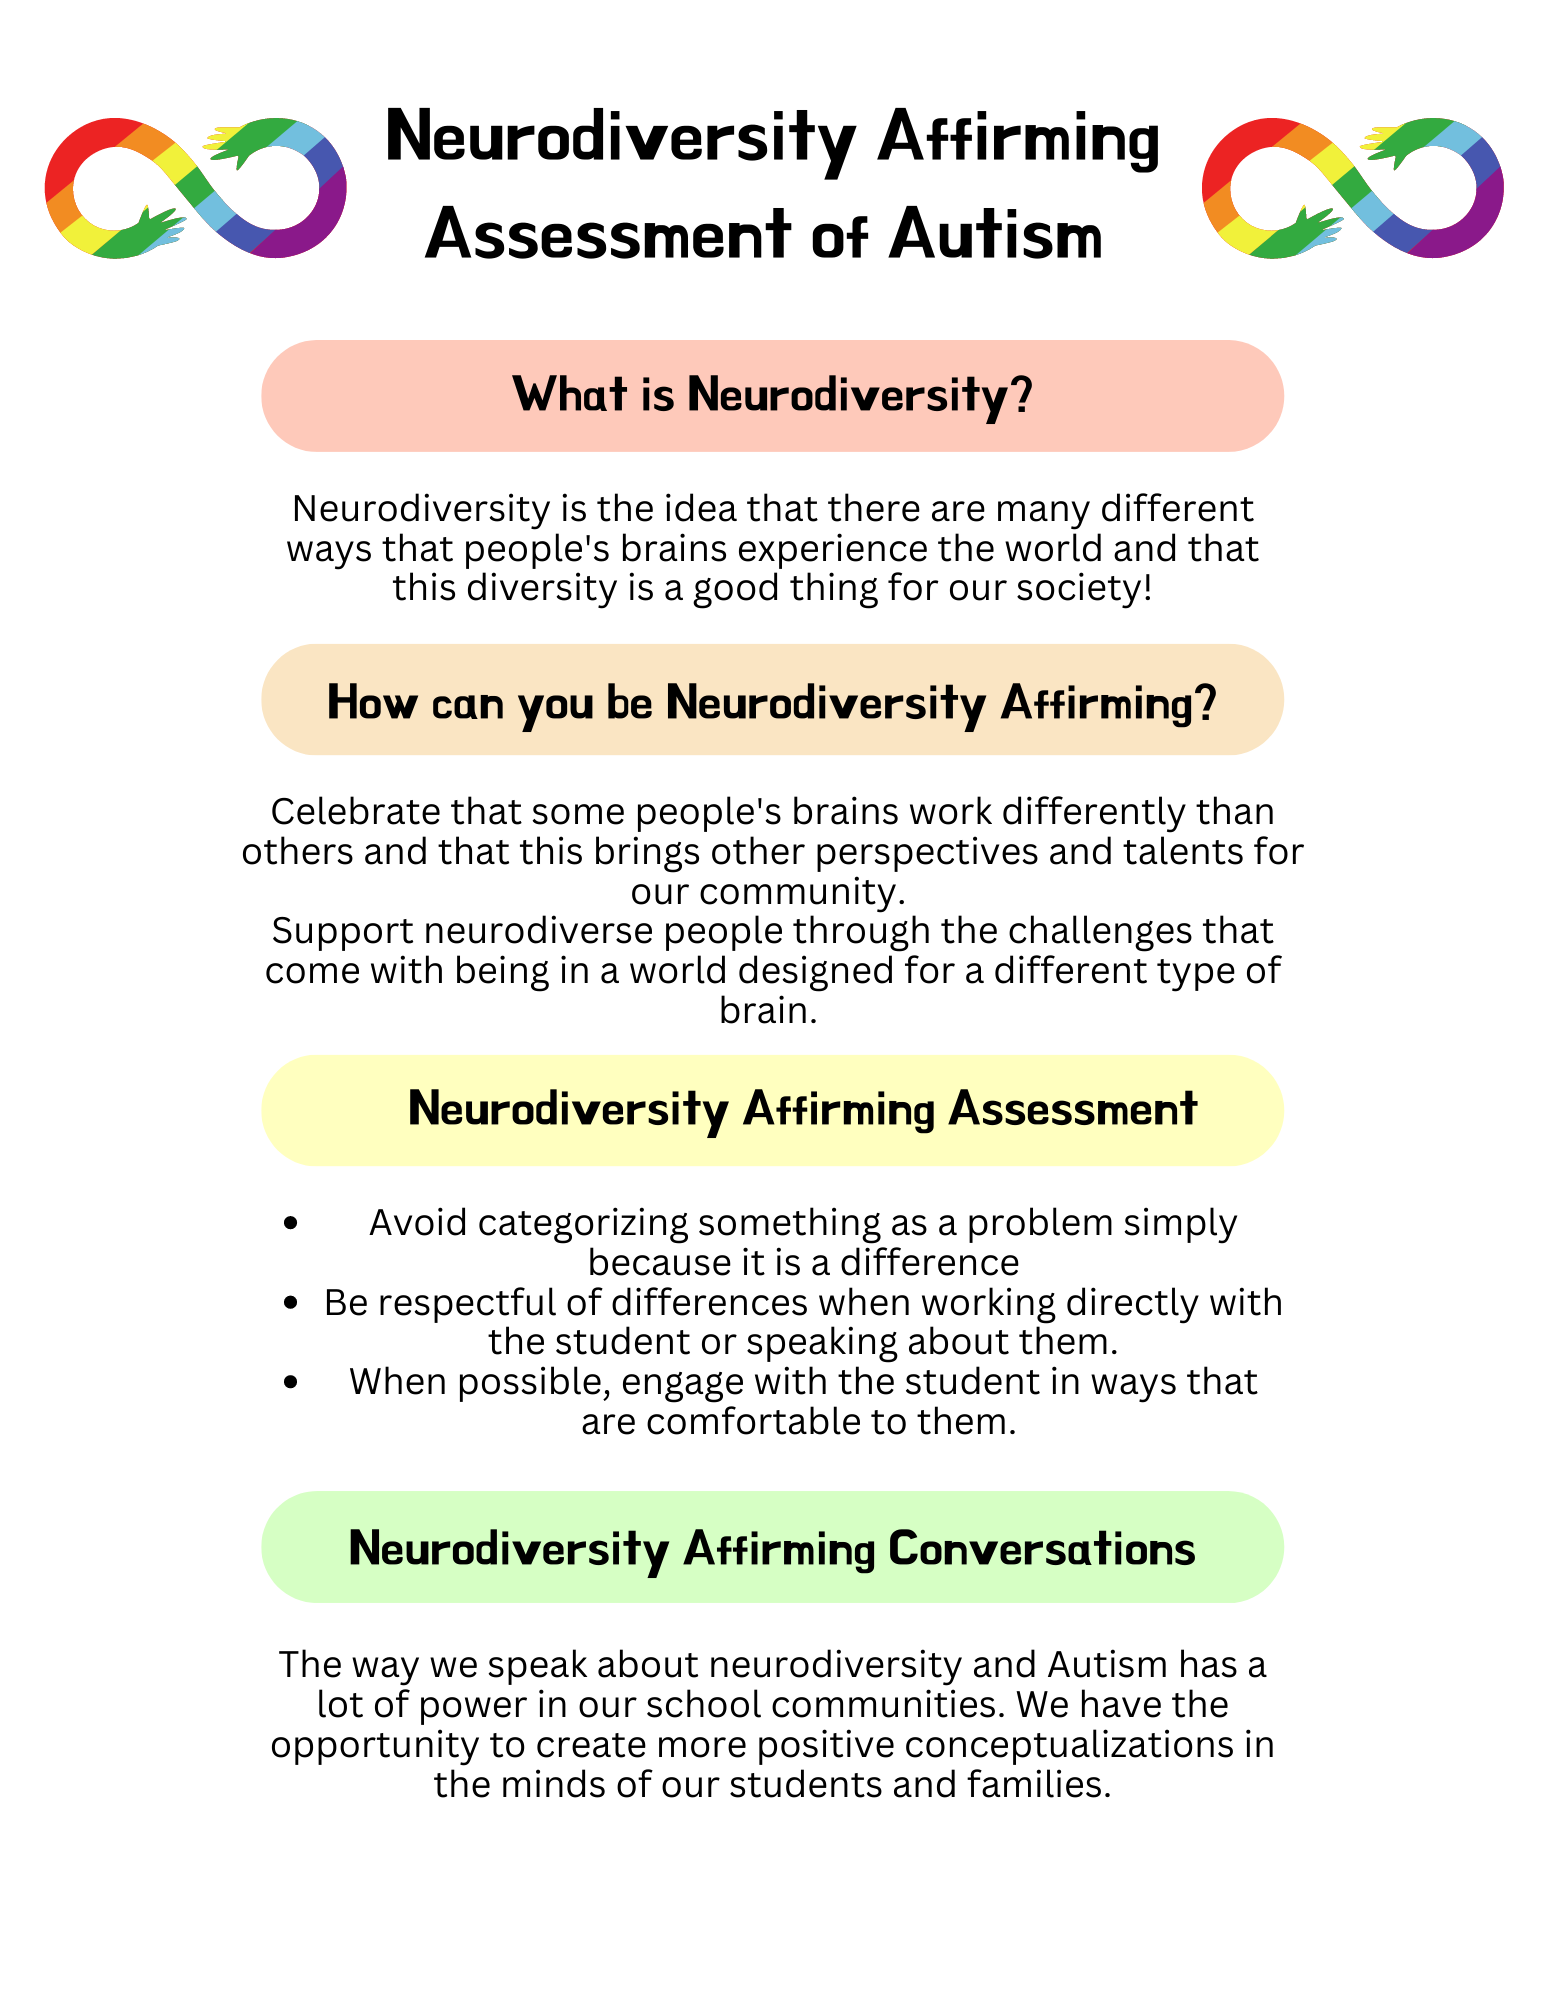 Neurodiversity Affirming Assessment of Autism designed by Mackenzie Sharbine, School Psychology Intern in Texas from Texas Woman's University